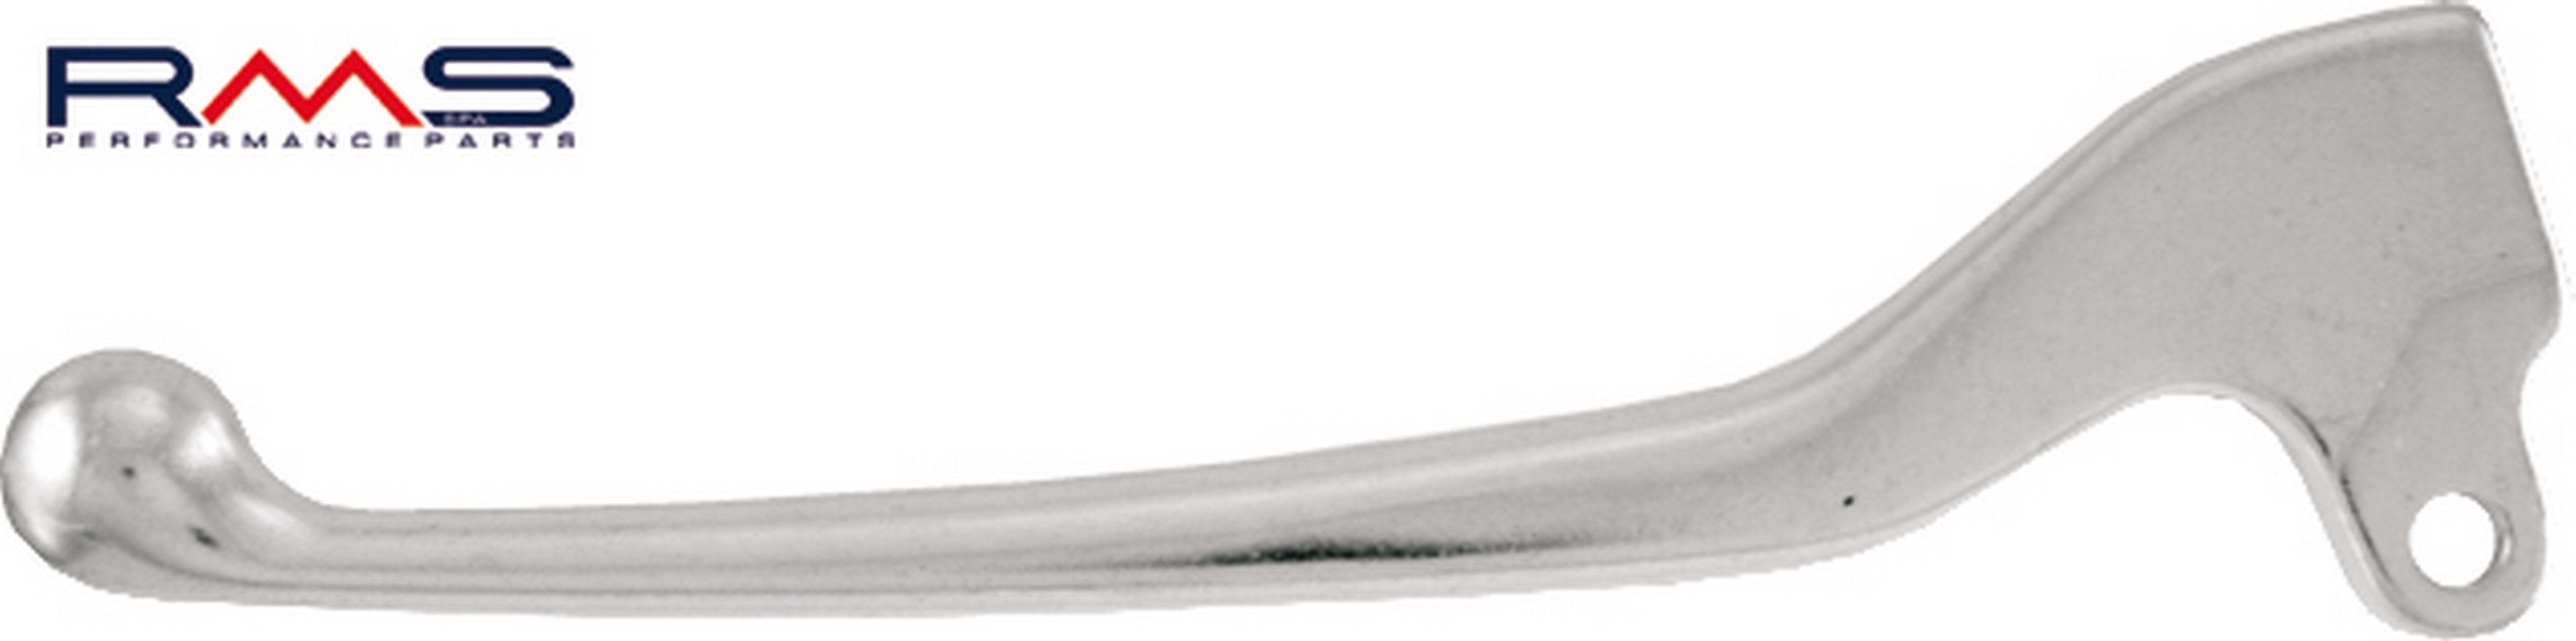 Obrázek produktu Páčka RMS 184100601 levý stříbrná Levý